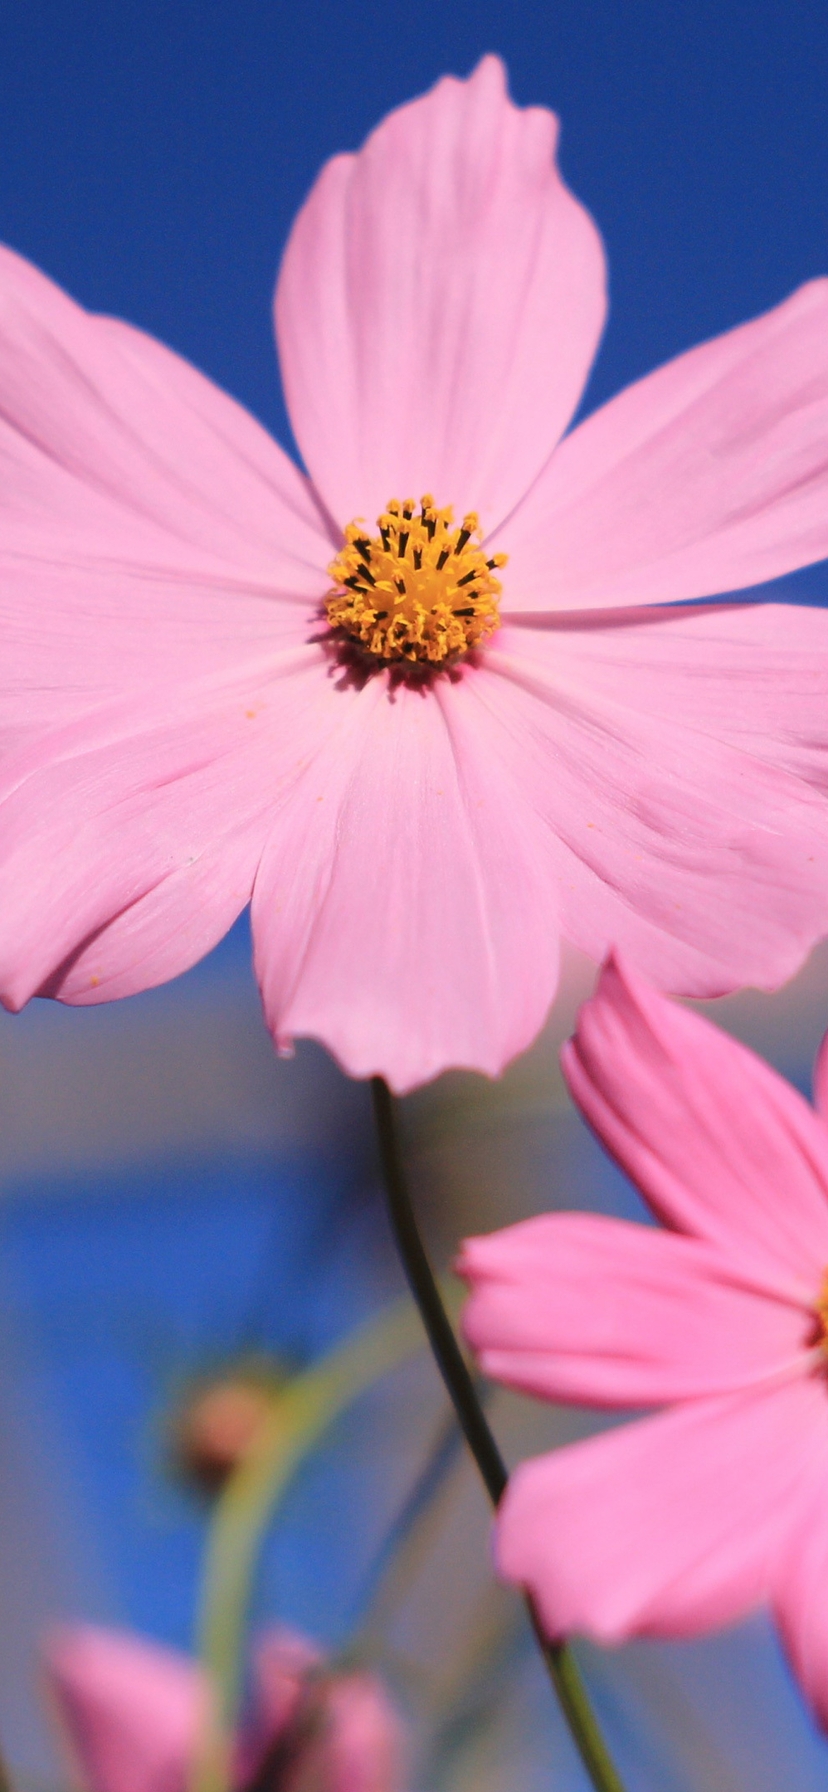 Image: Cosmos bipinnatus, flowers, pink, blue background